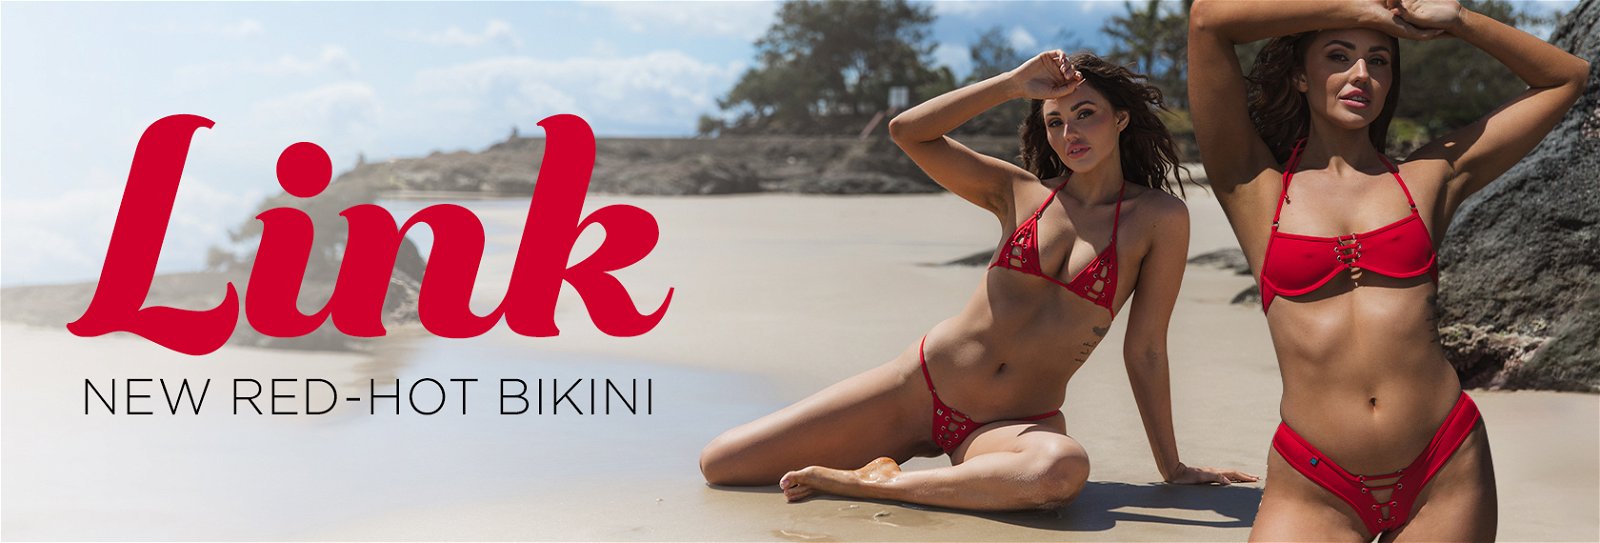 Link Bikini Banner 1680x570 MM (3)